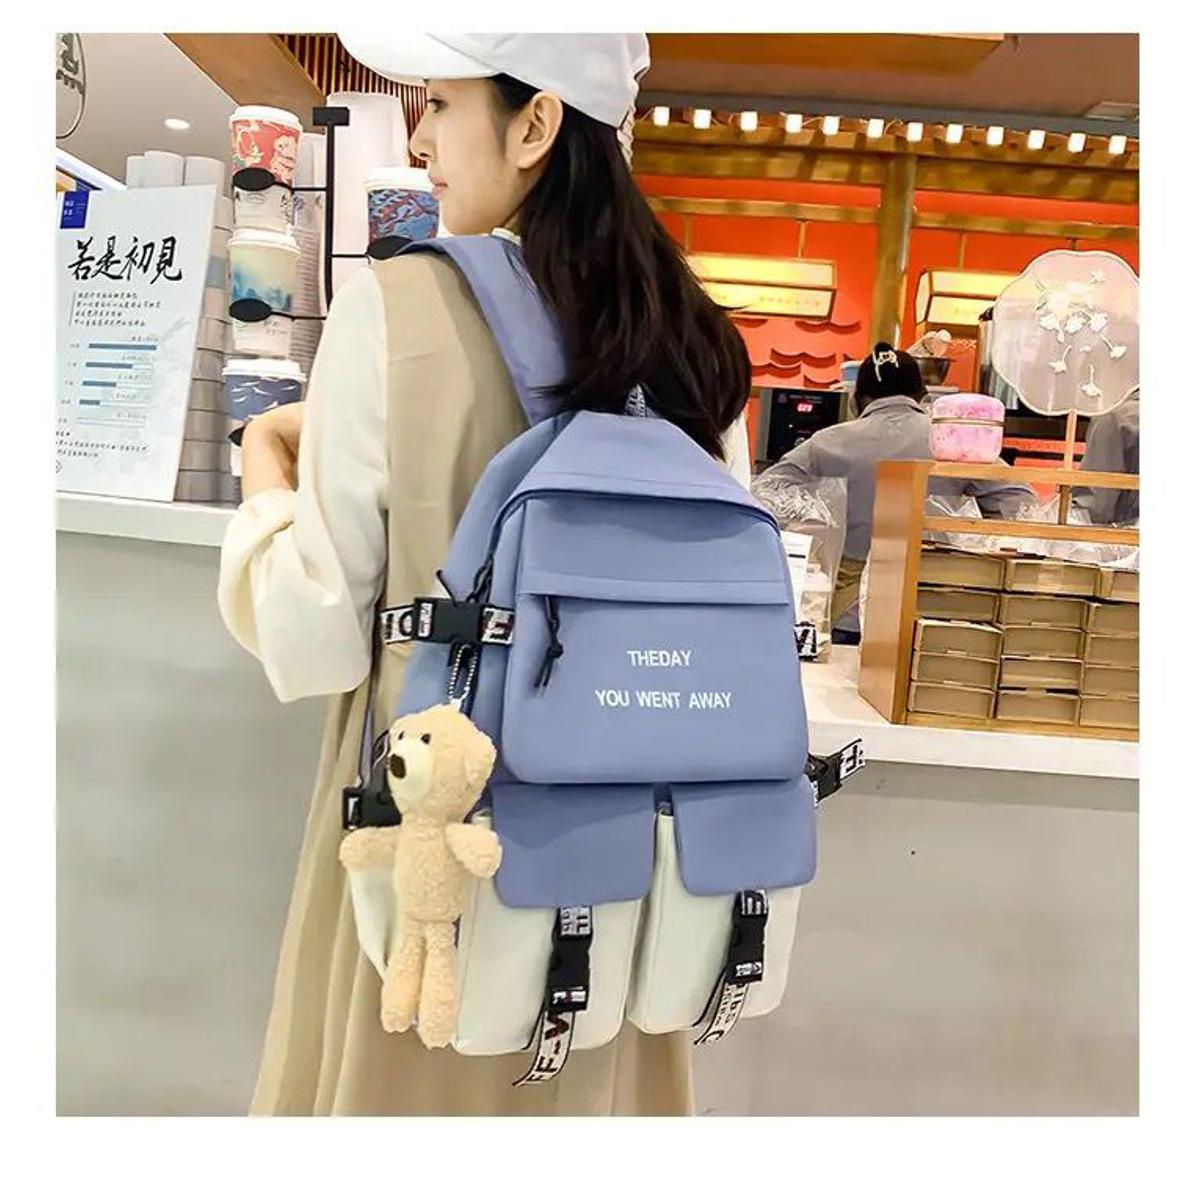 Where Can I Find Cute Backpacks for High School Girls?